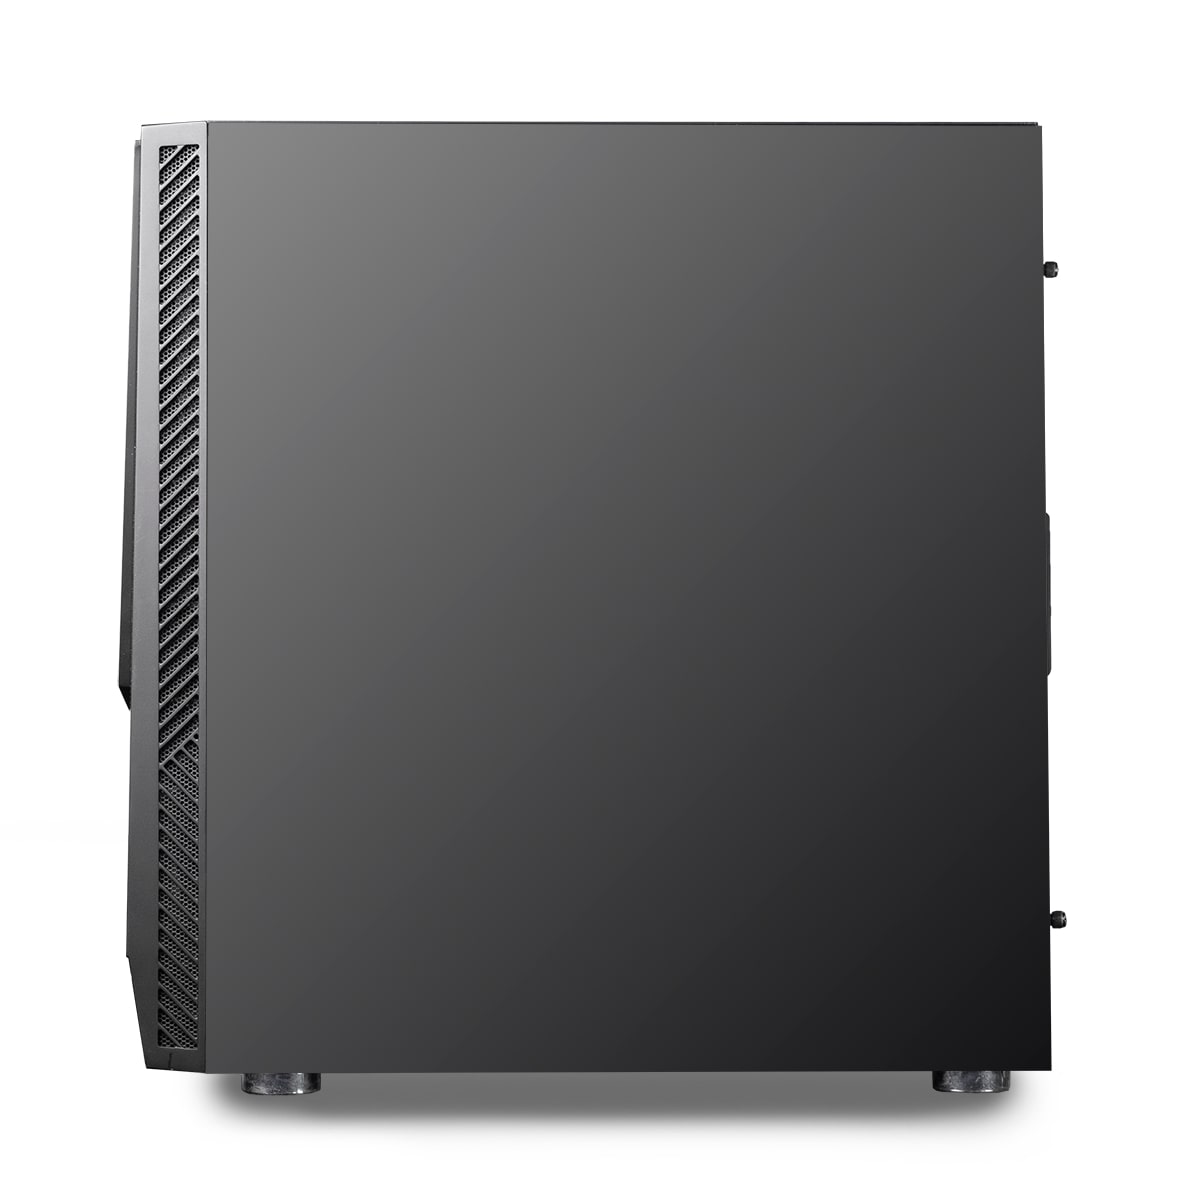 iBUYPOWER Gaming Desktop Computer SlateMR 249a | R5 3600 8 GB GTX 1650 4 GB 500 GB SSD w/ Fan Cooling